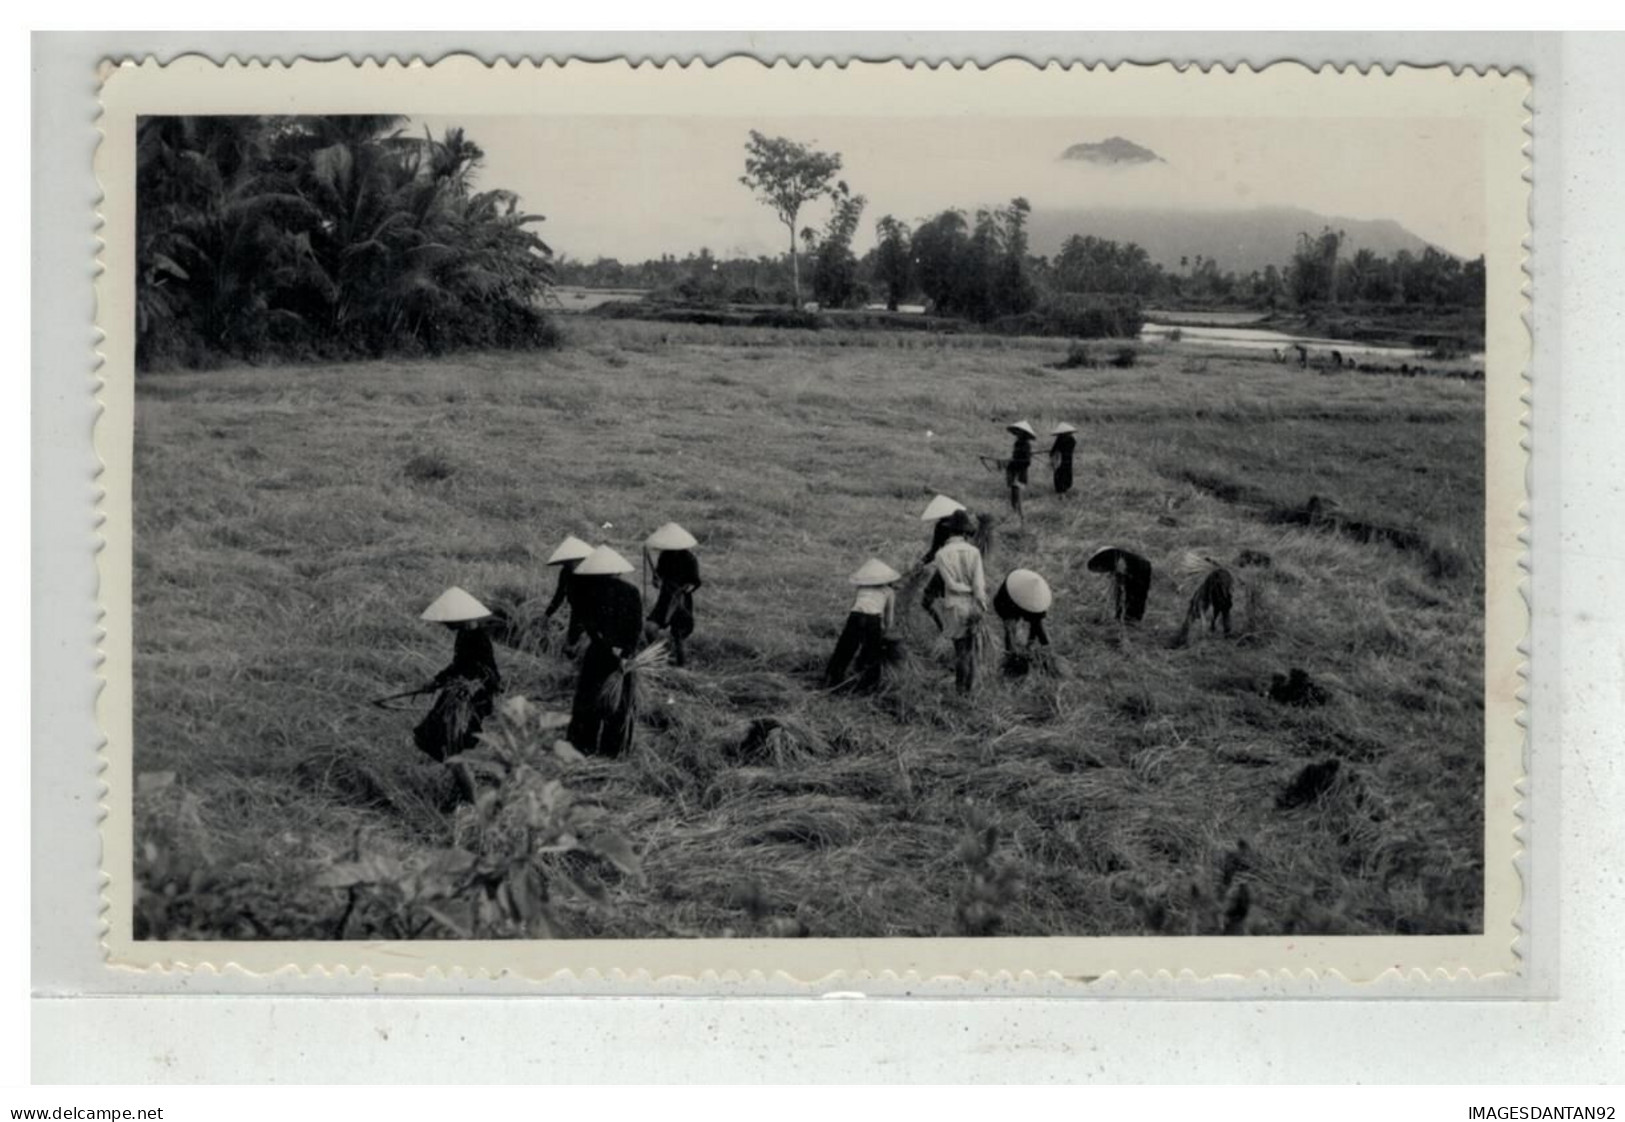 TONKIN INDOCHINE VIETNAM SAIGON #18539 NHA TRANG NHATRANG FENAISON AGRICULTURE CARTE PHOTO - Vietnam